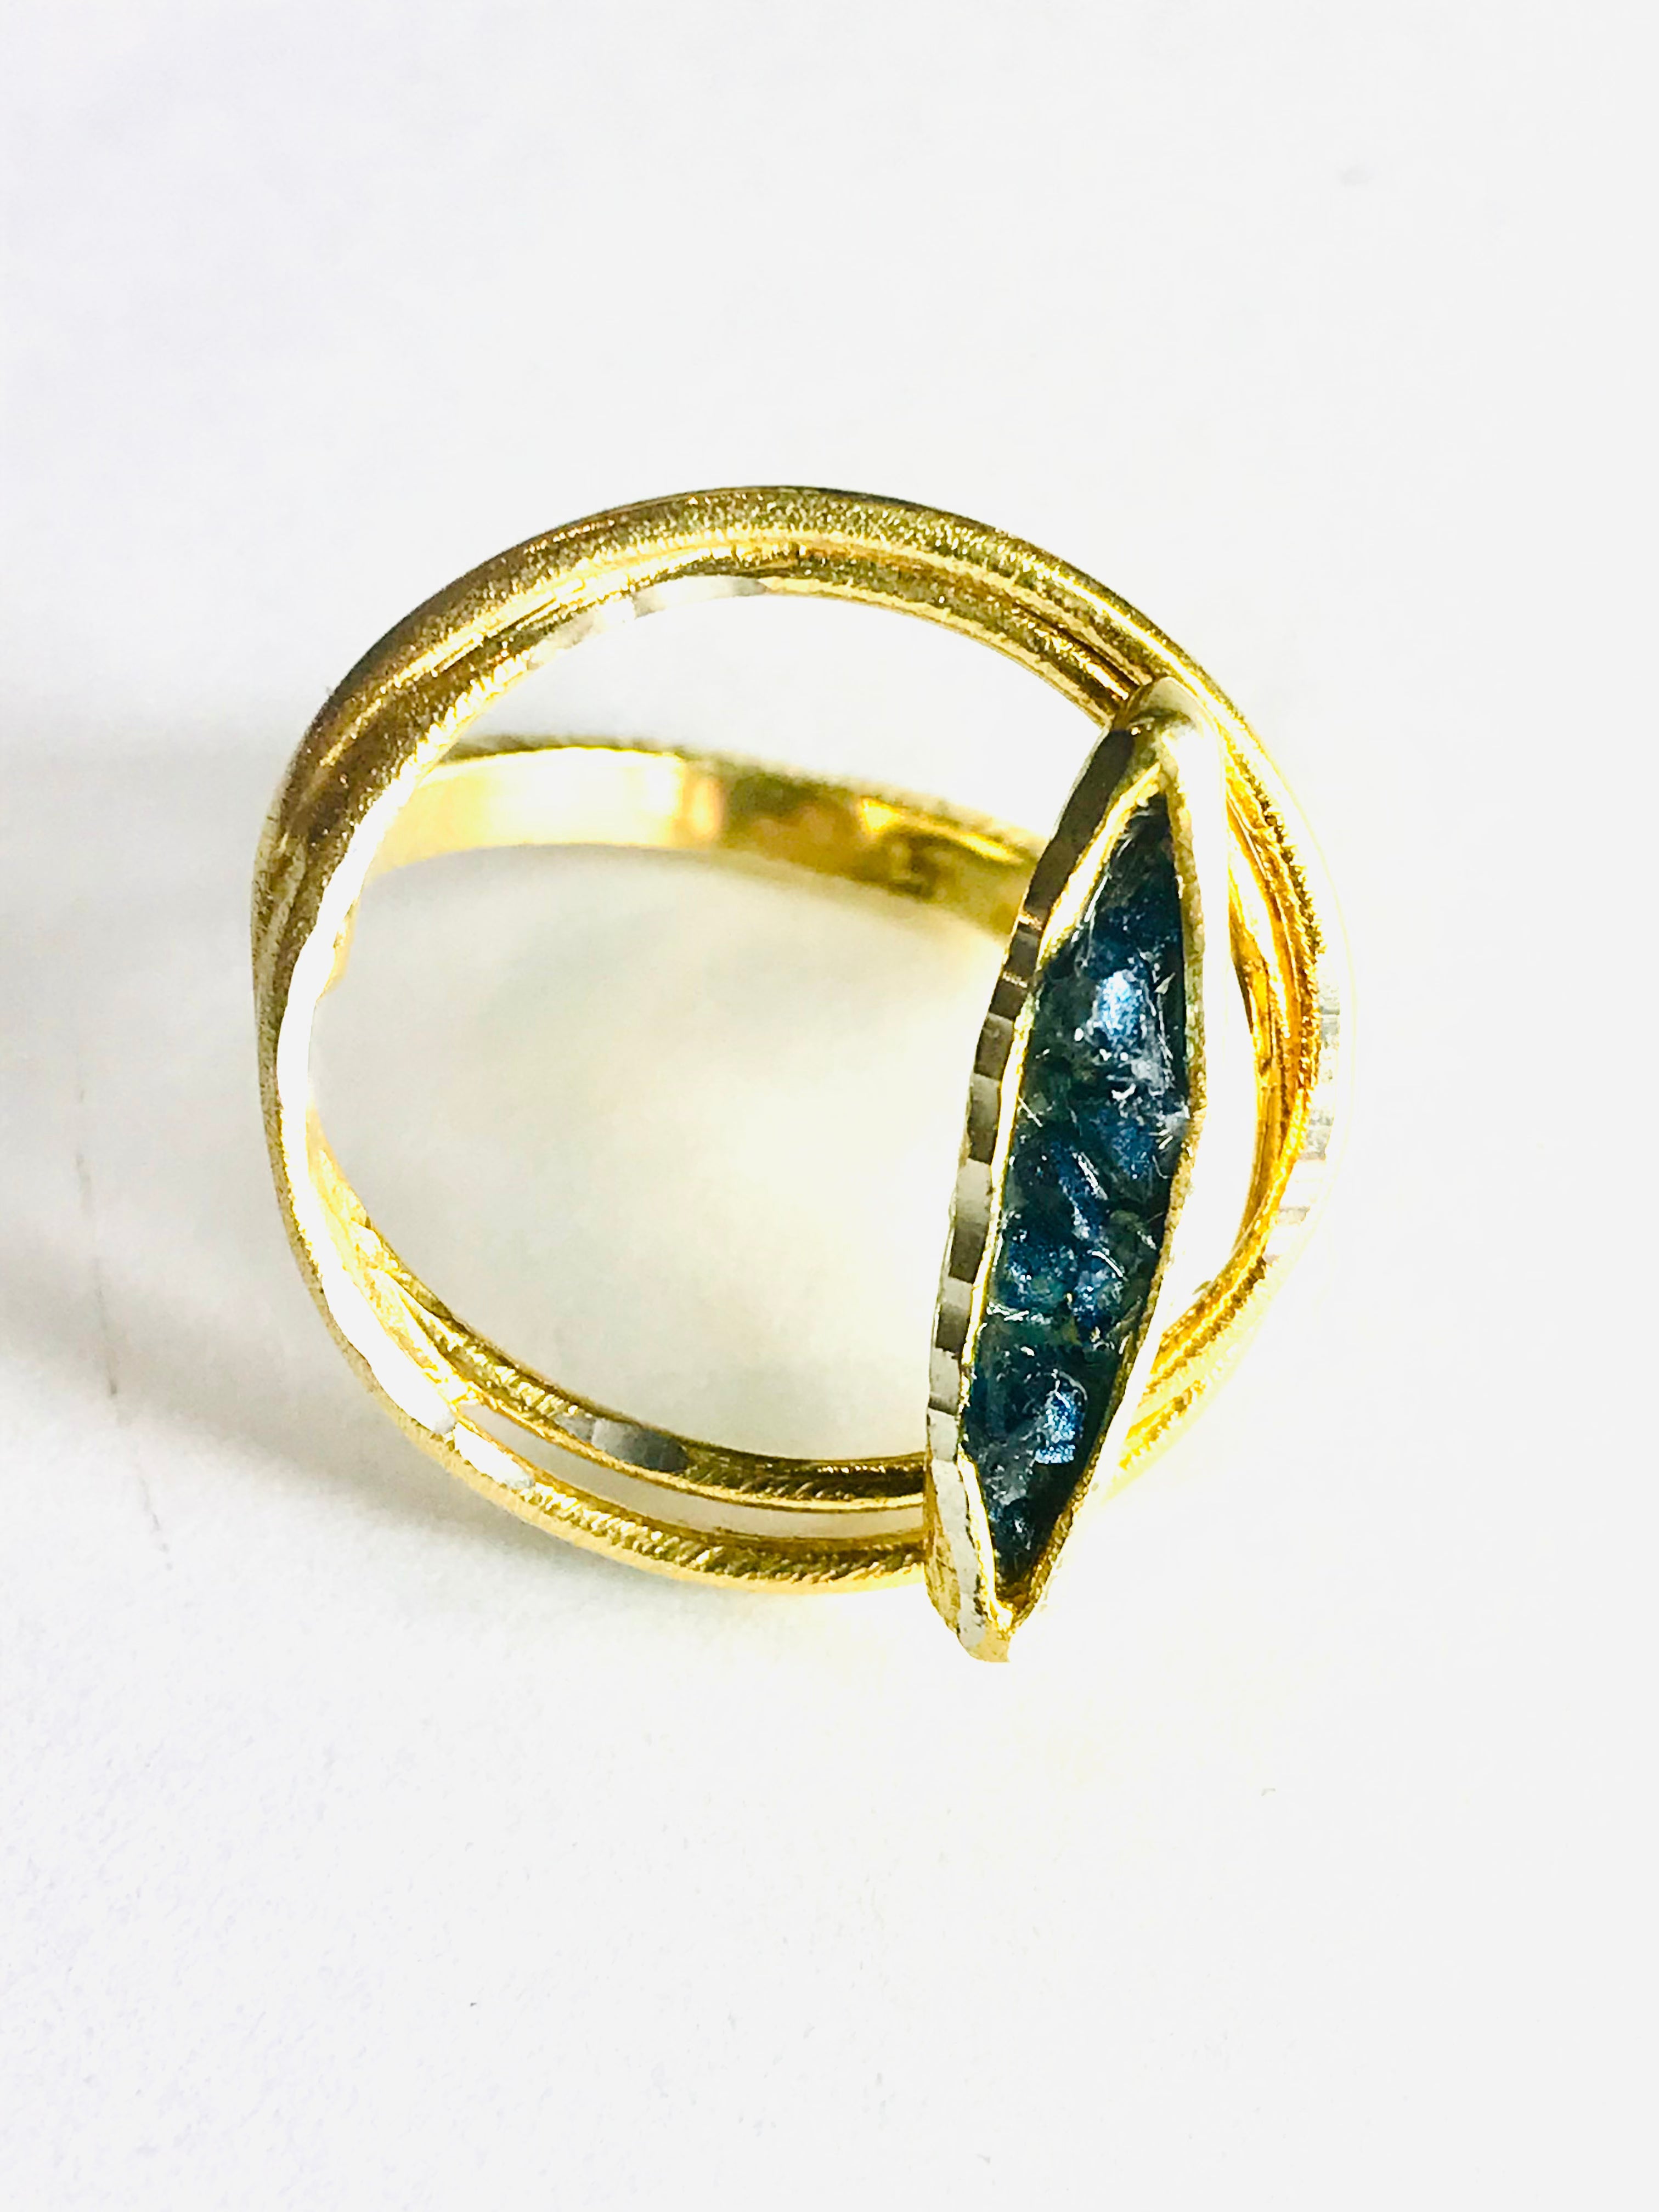 Gold Geode Ring - The Nancy Smillie Shop - Art, Jewellery & Designer Gifts Glasgow